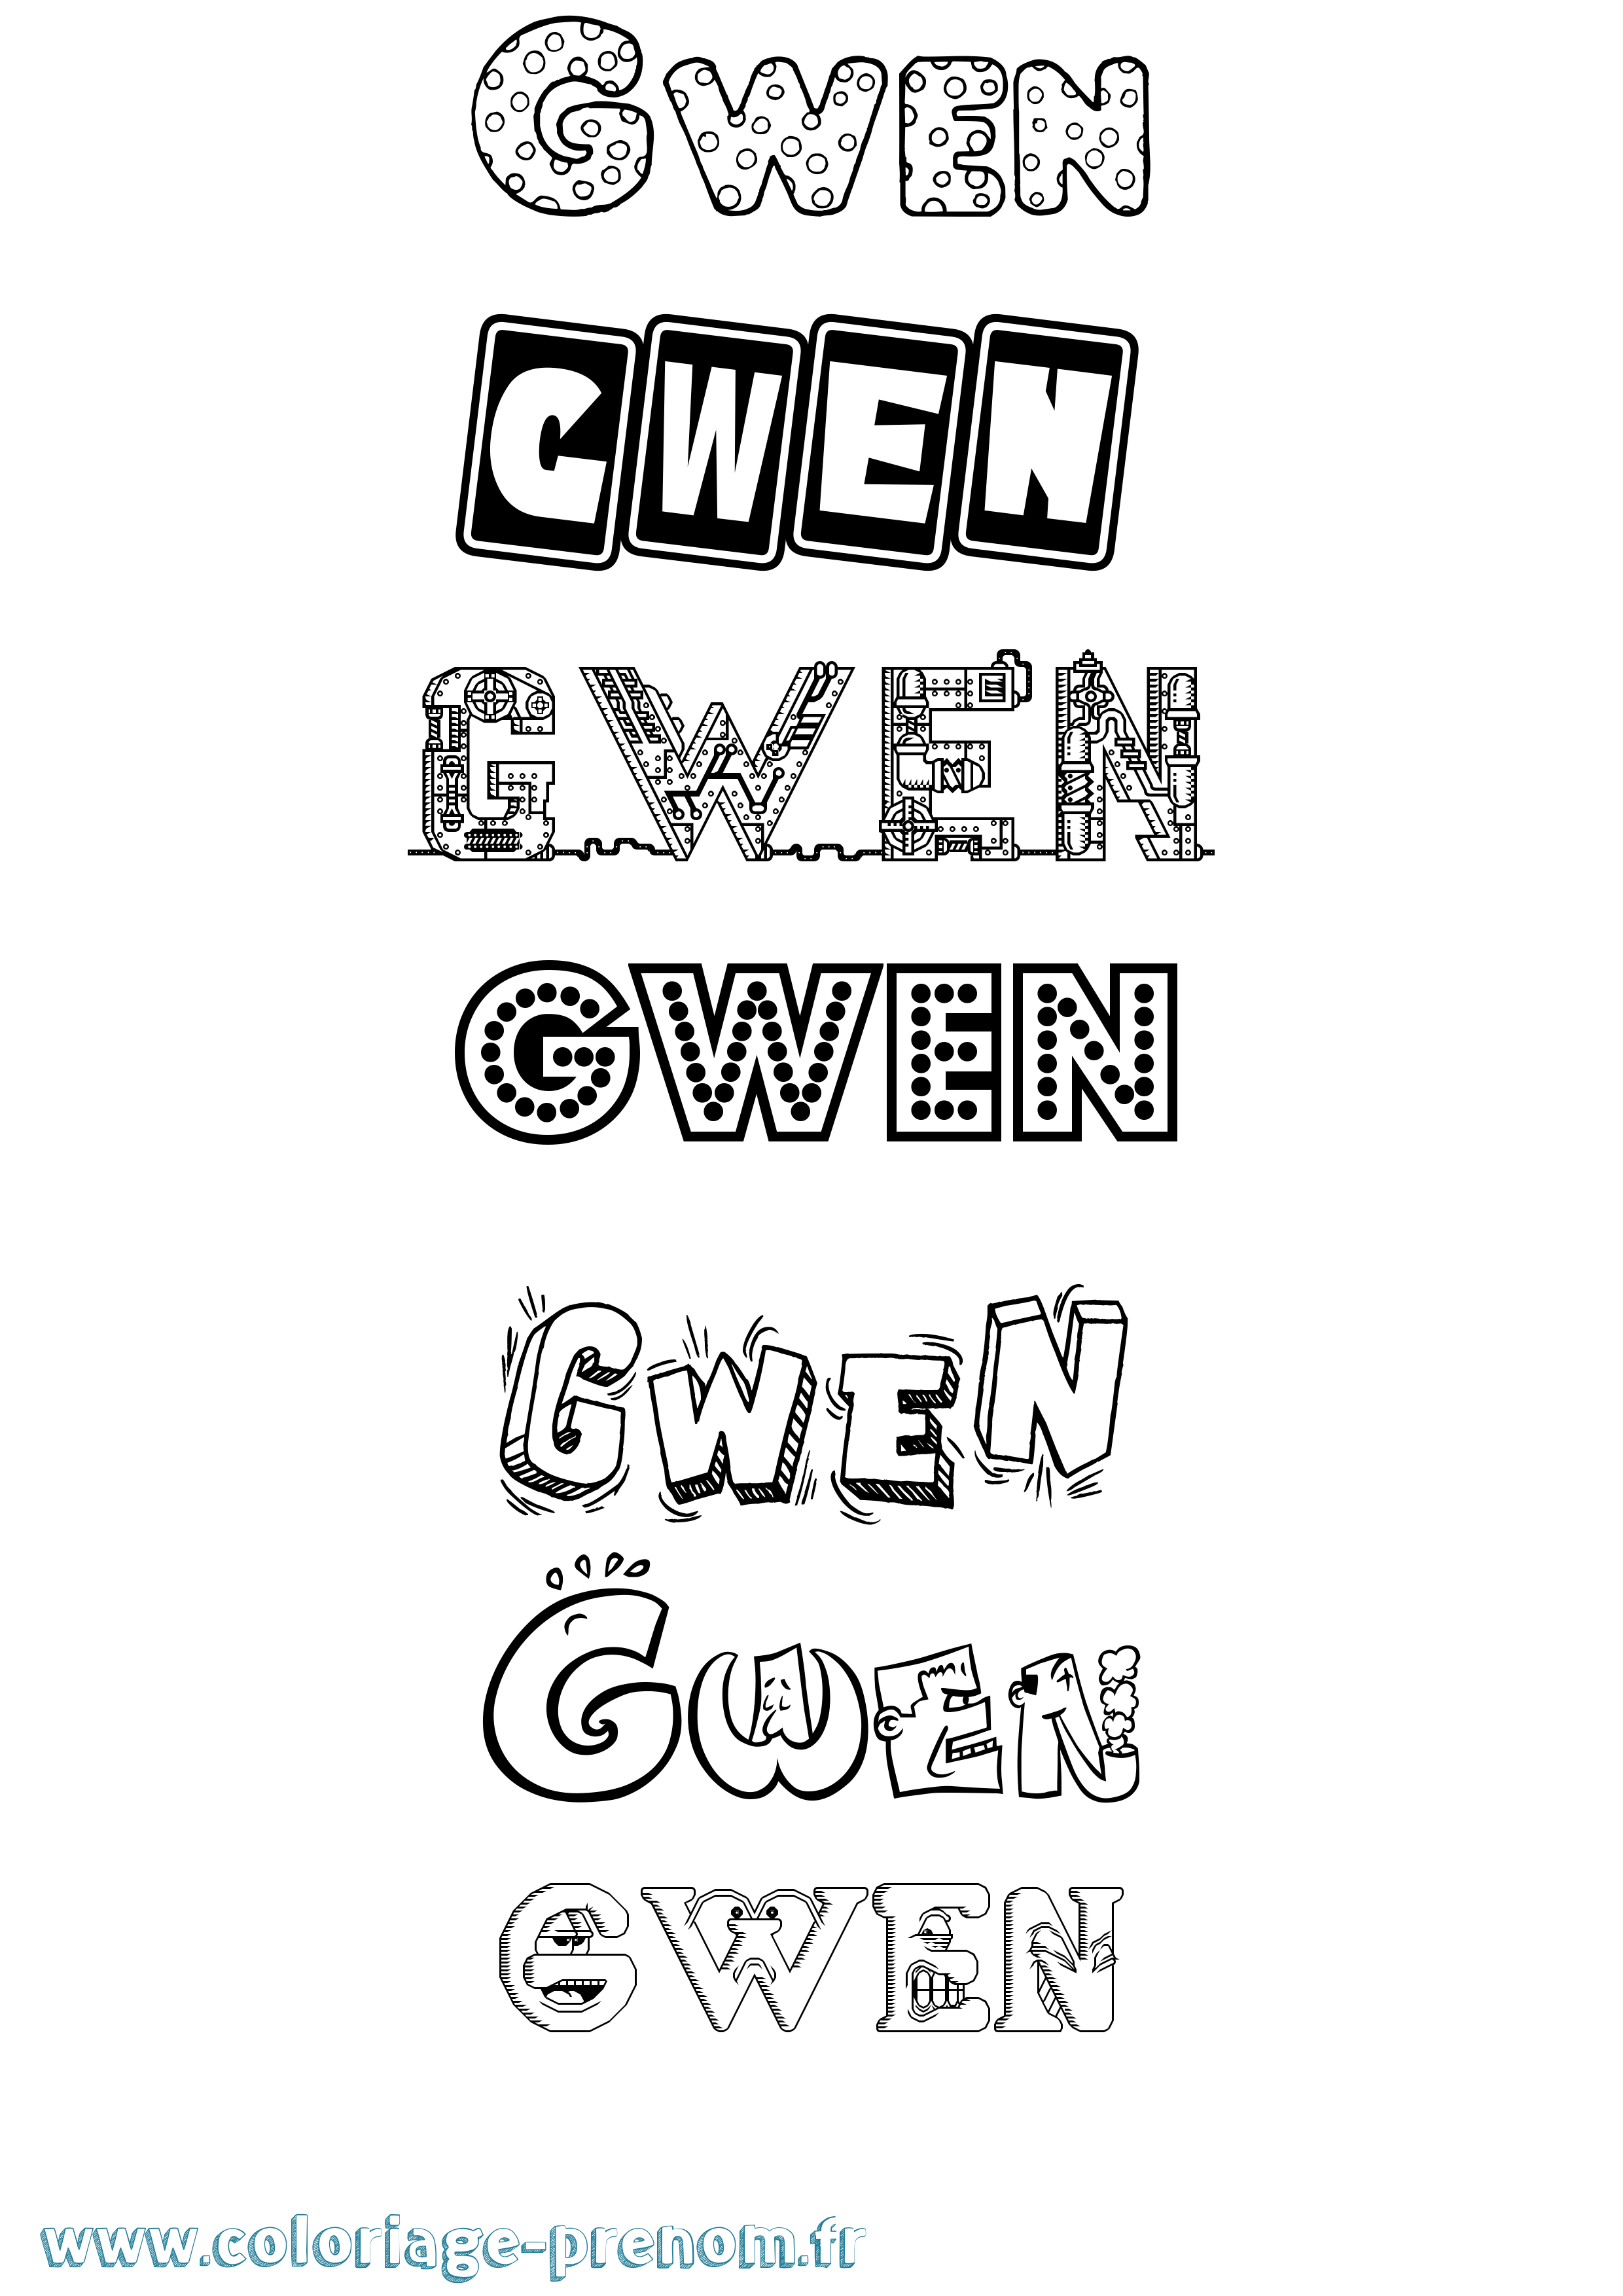 Coloriage prénom Gwen Fun